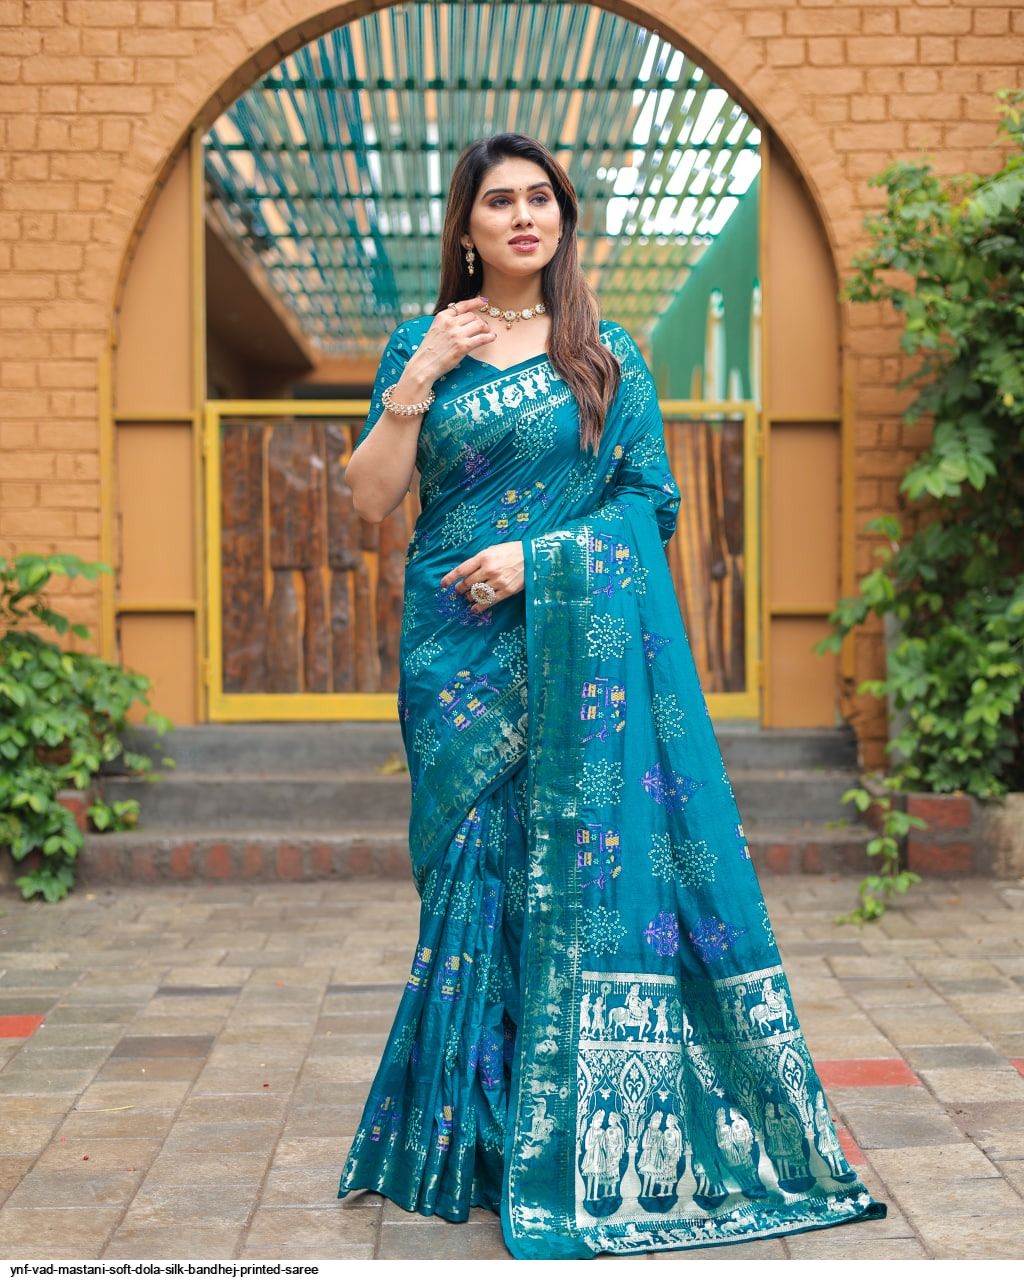 2 minute stitched Nauvari saree - Mastani style